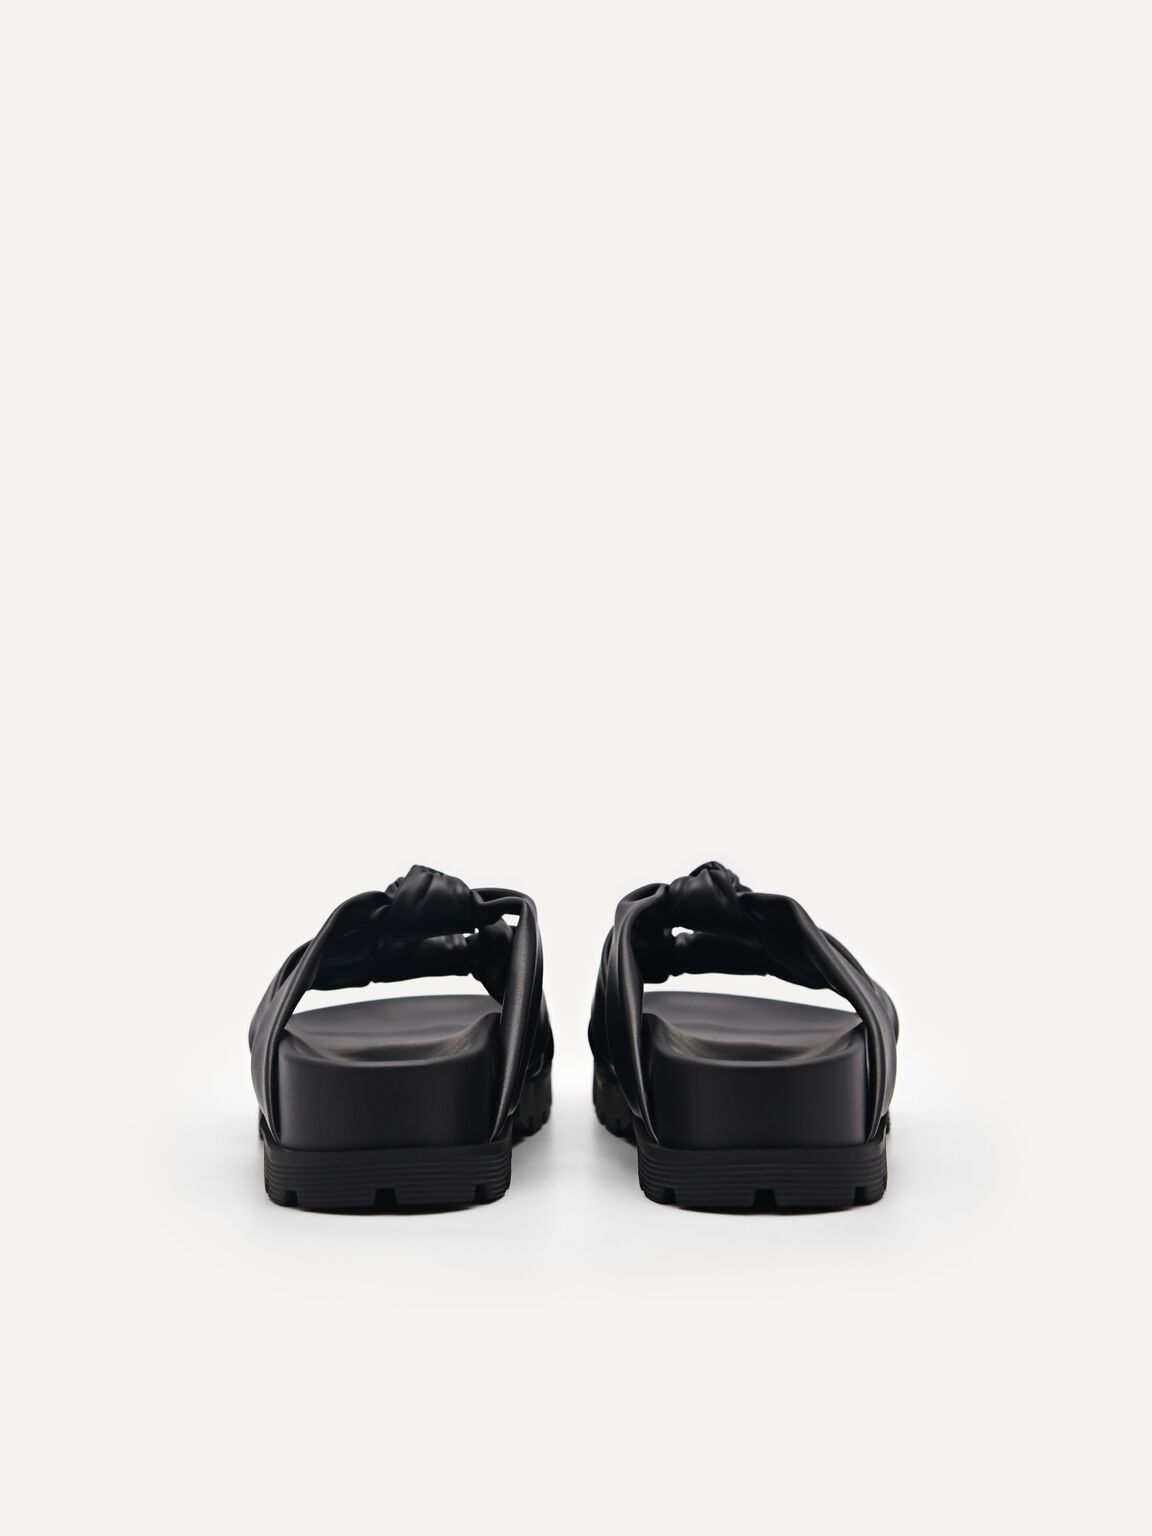 Celeste Knot Sandals, Black